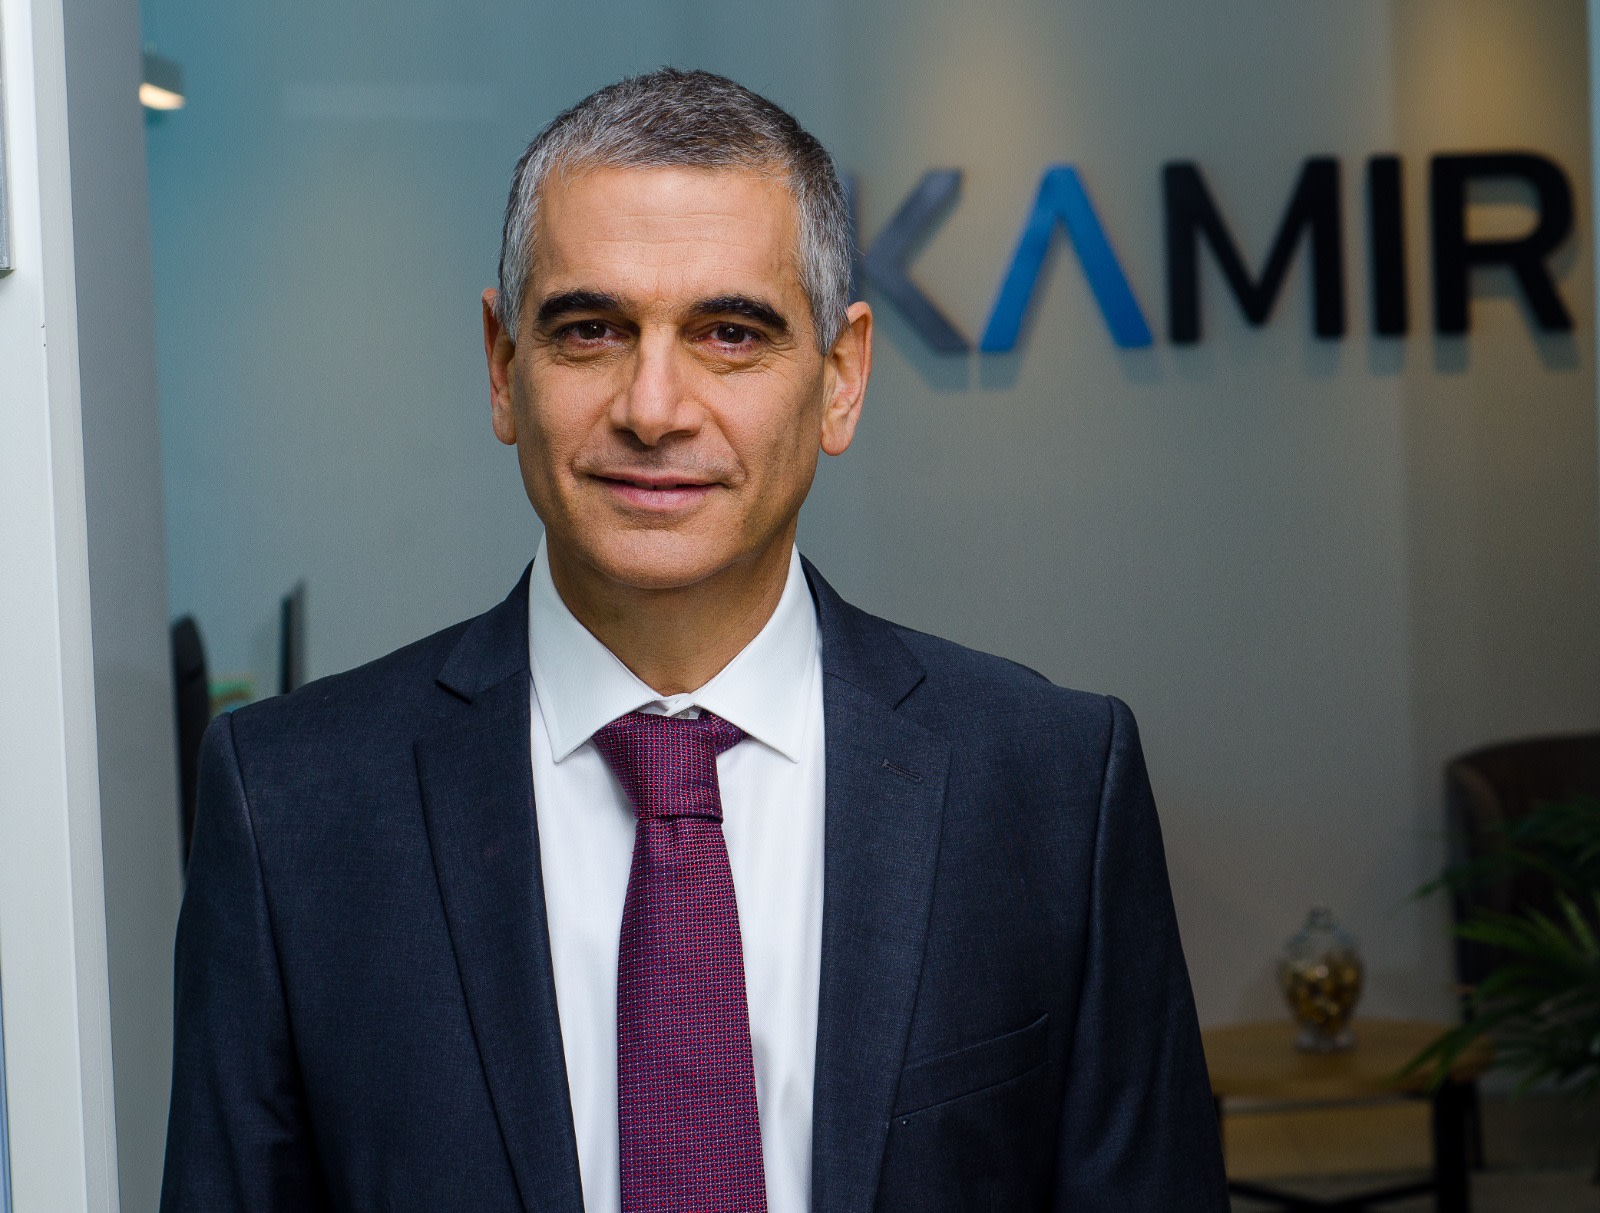 Eli Kamir, Owner and Chairman, KAMIR (Credit: Tomer Yaakovson)